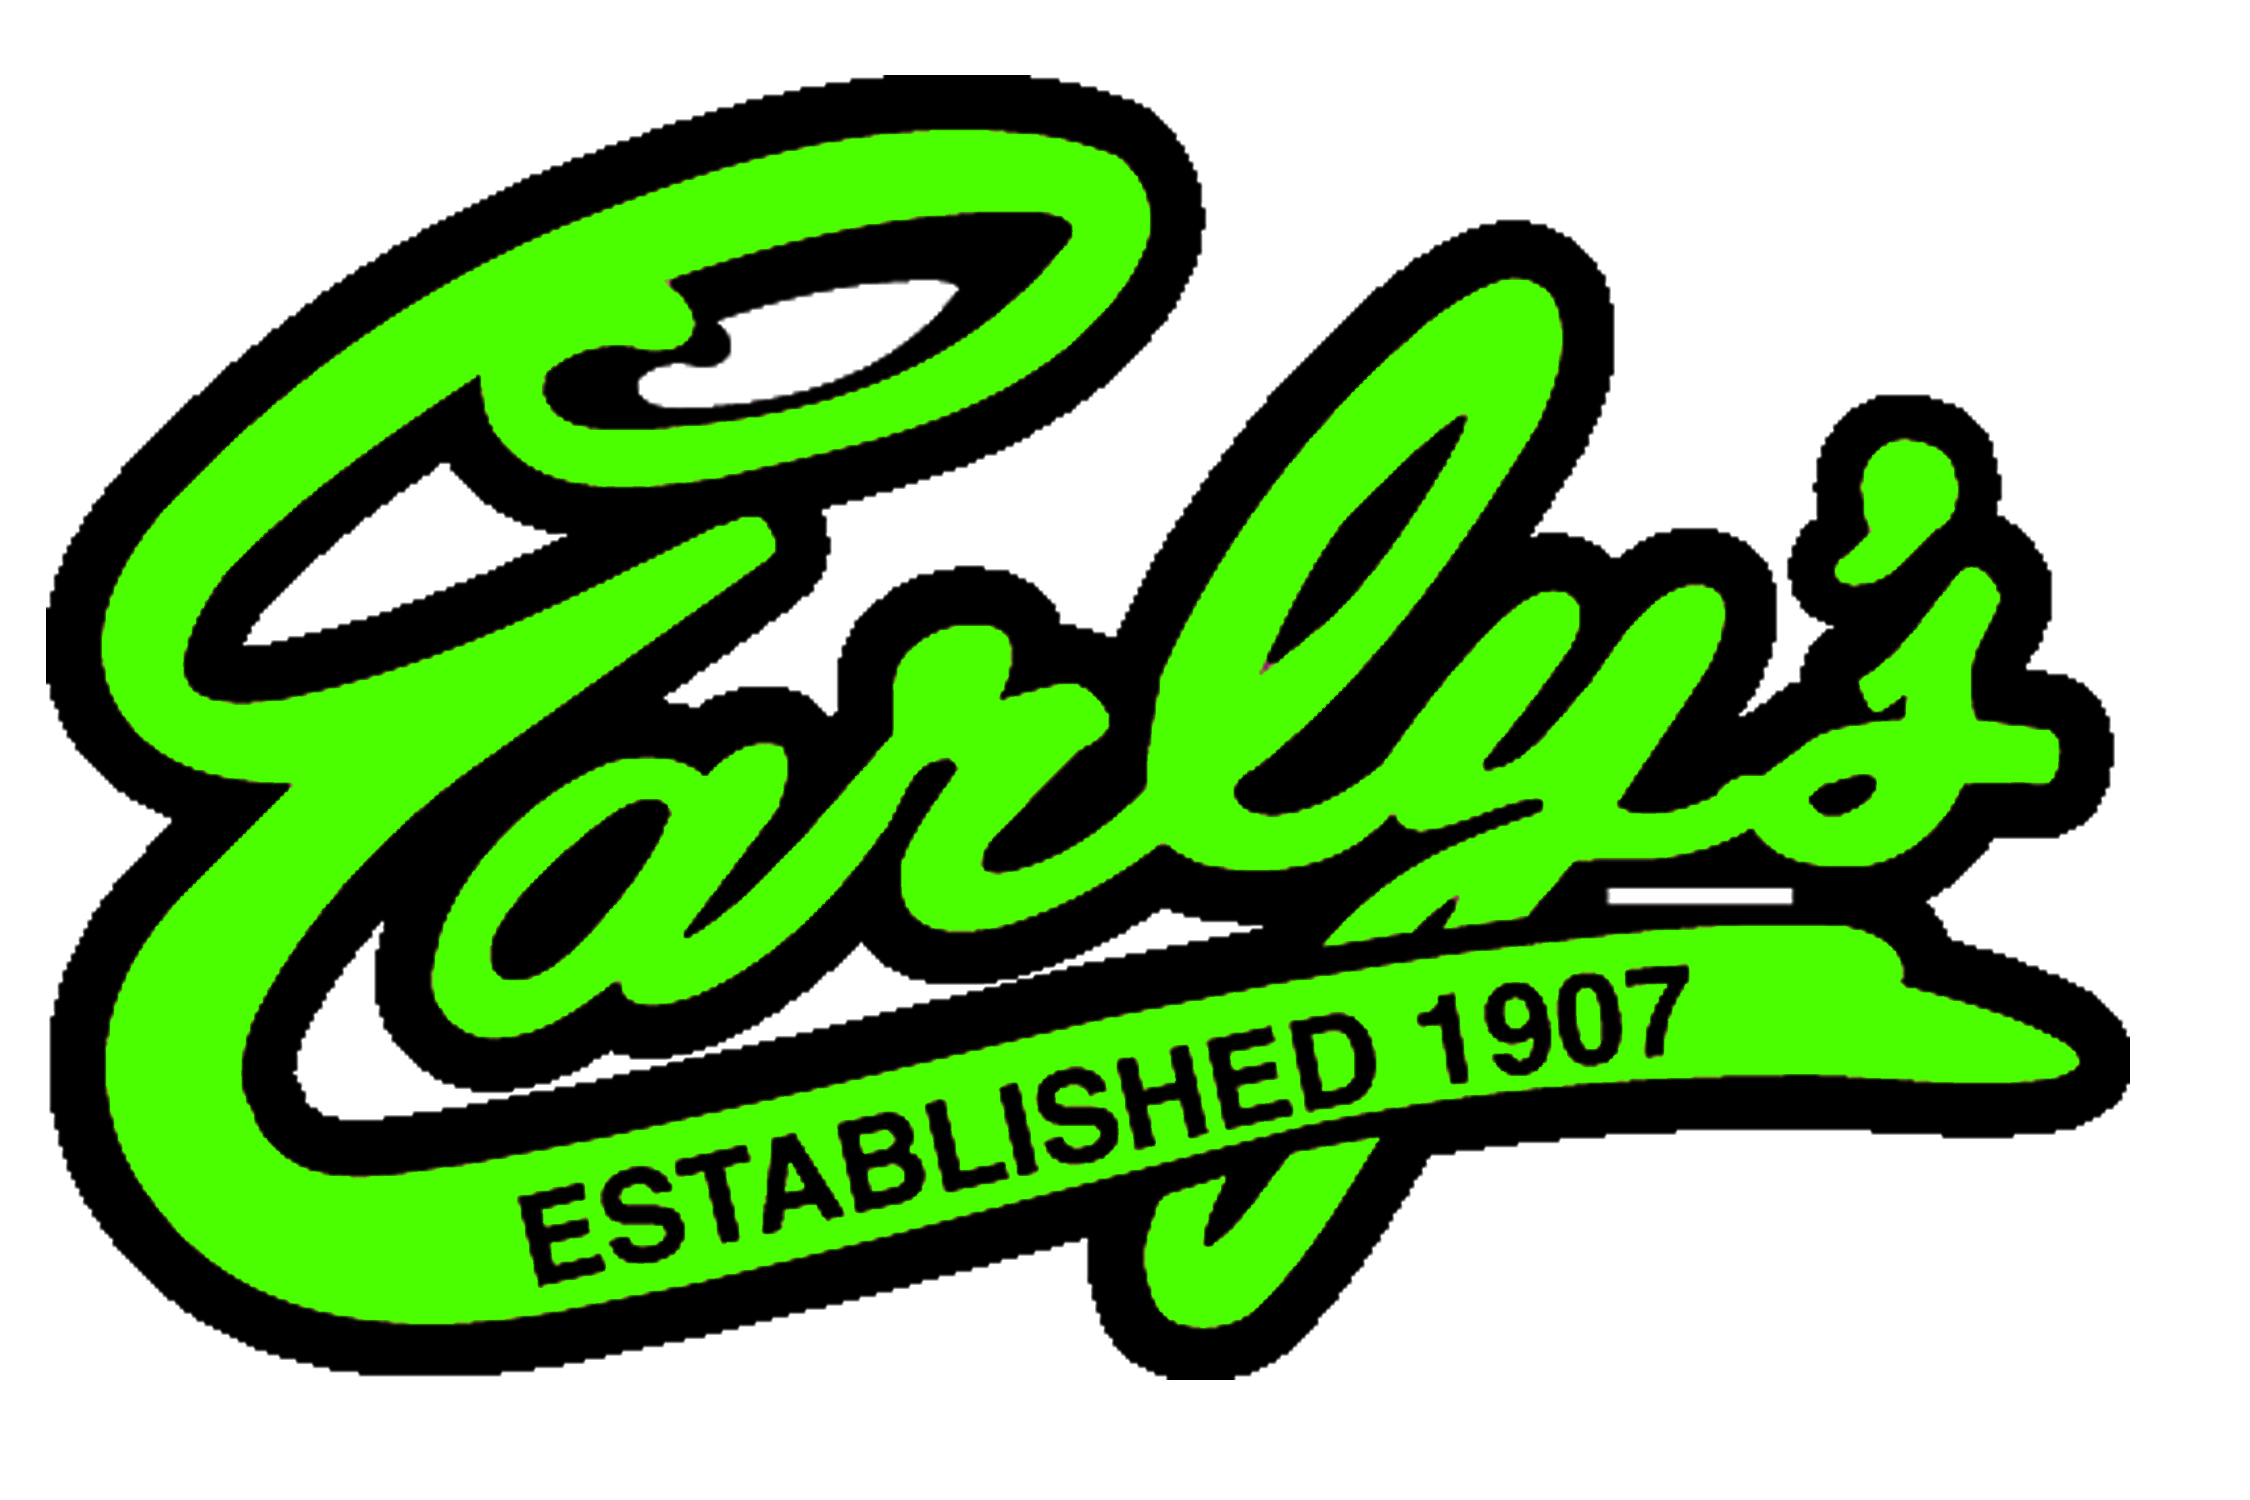 Early's logo illus2_green_lg.jpg